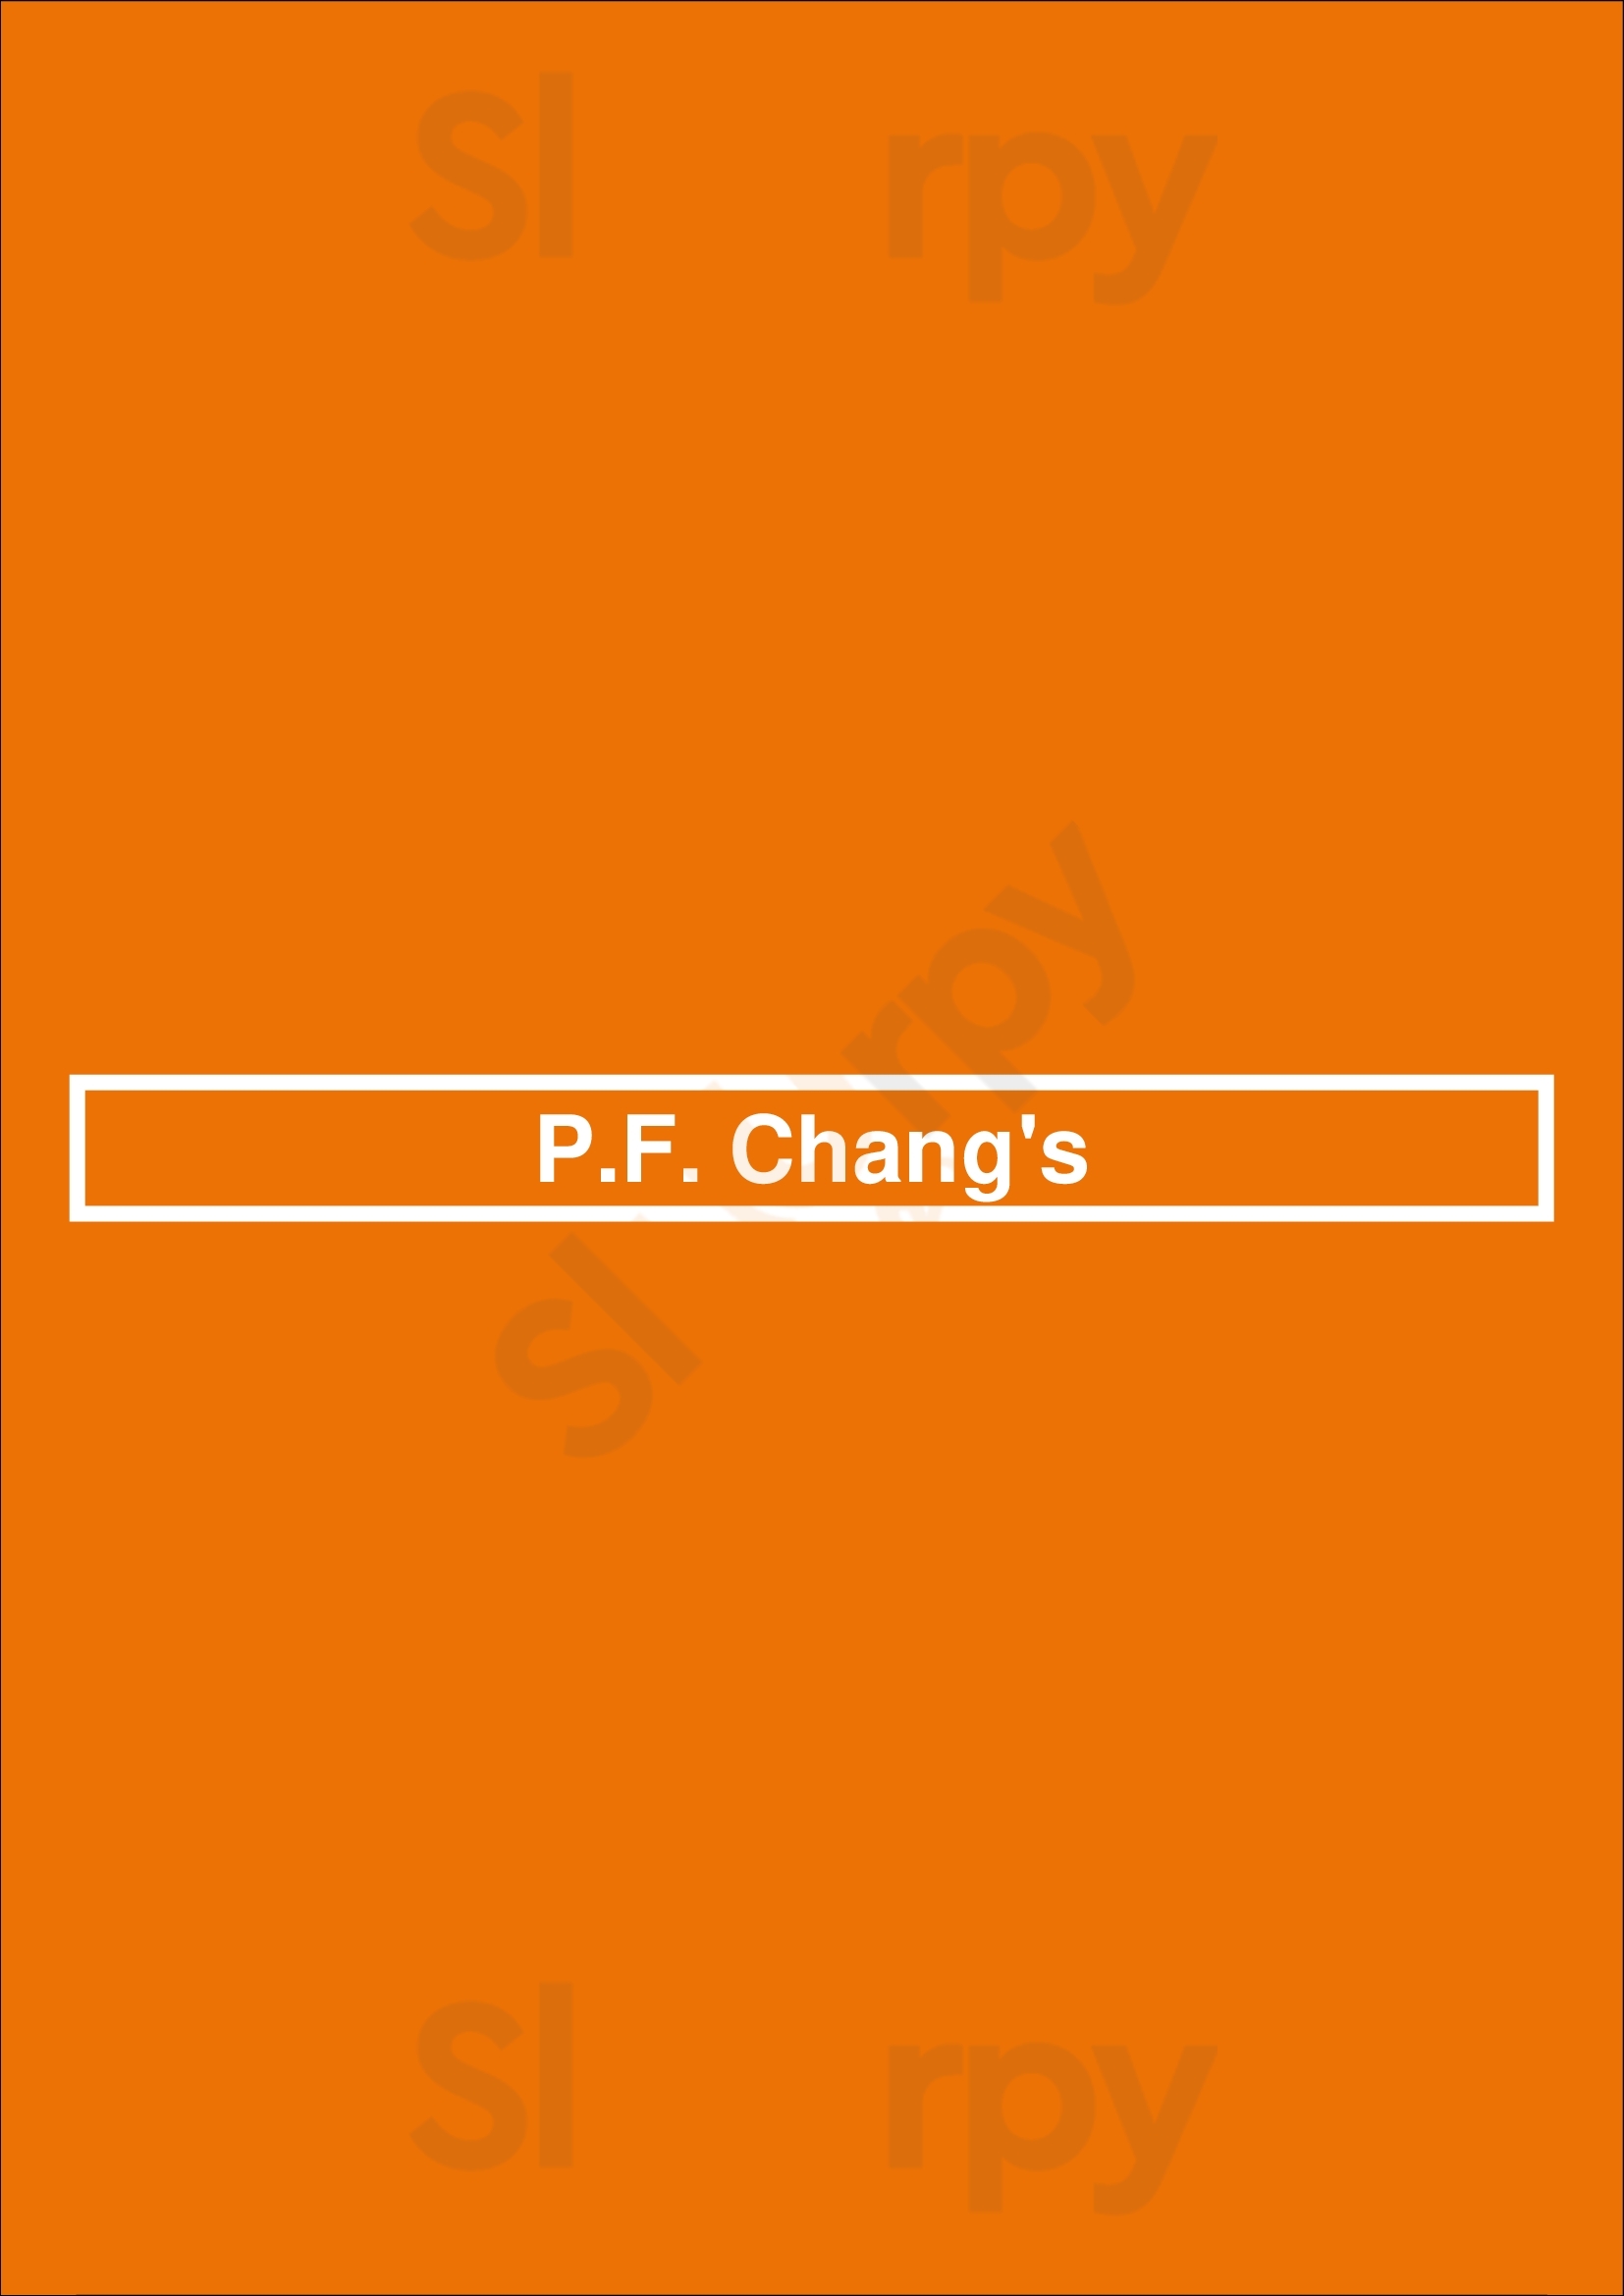 P.f. Chang's Lubbock Menu - 1